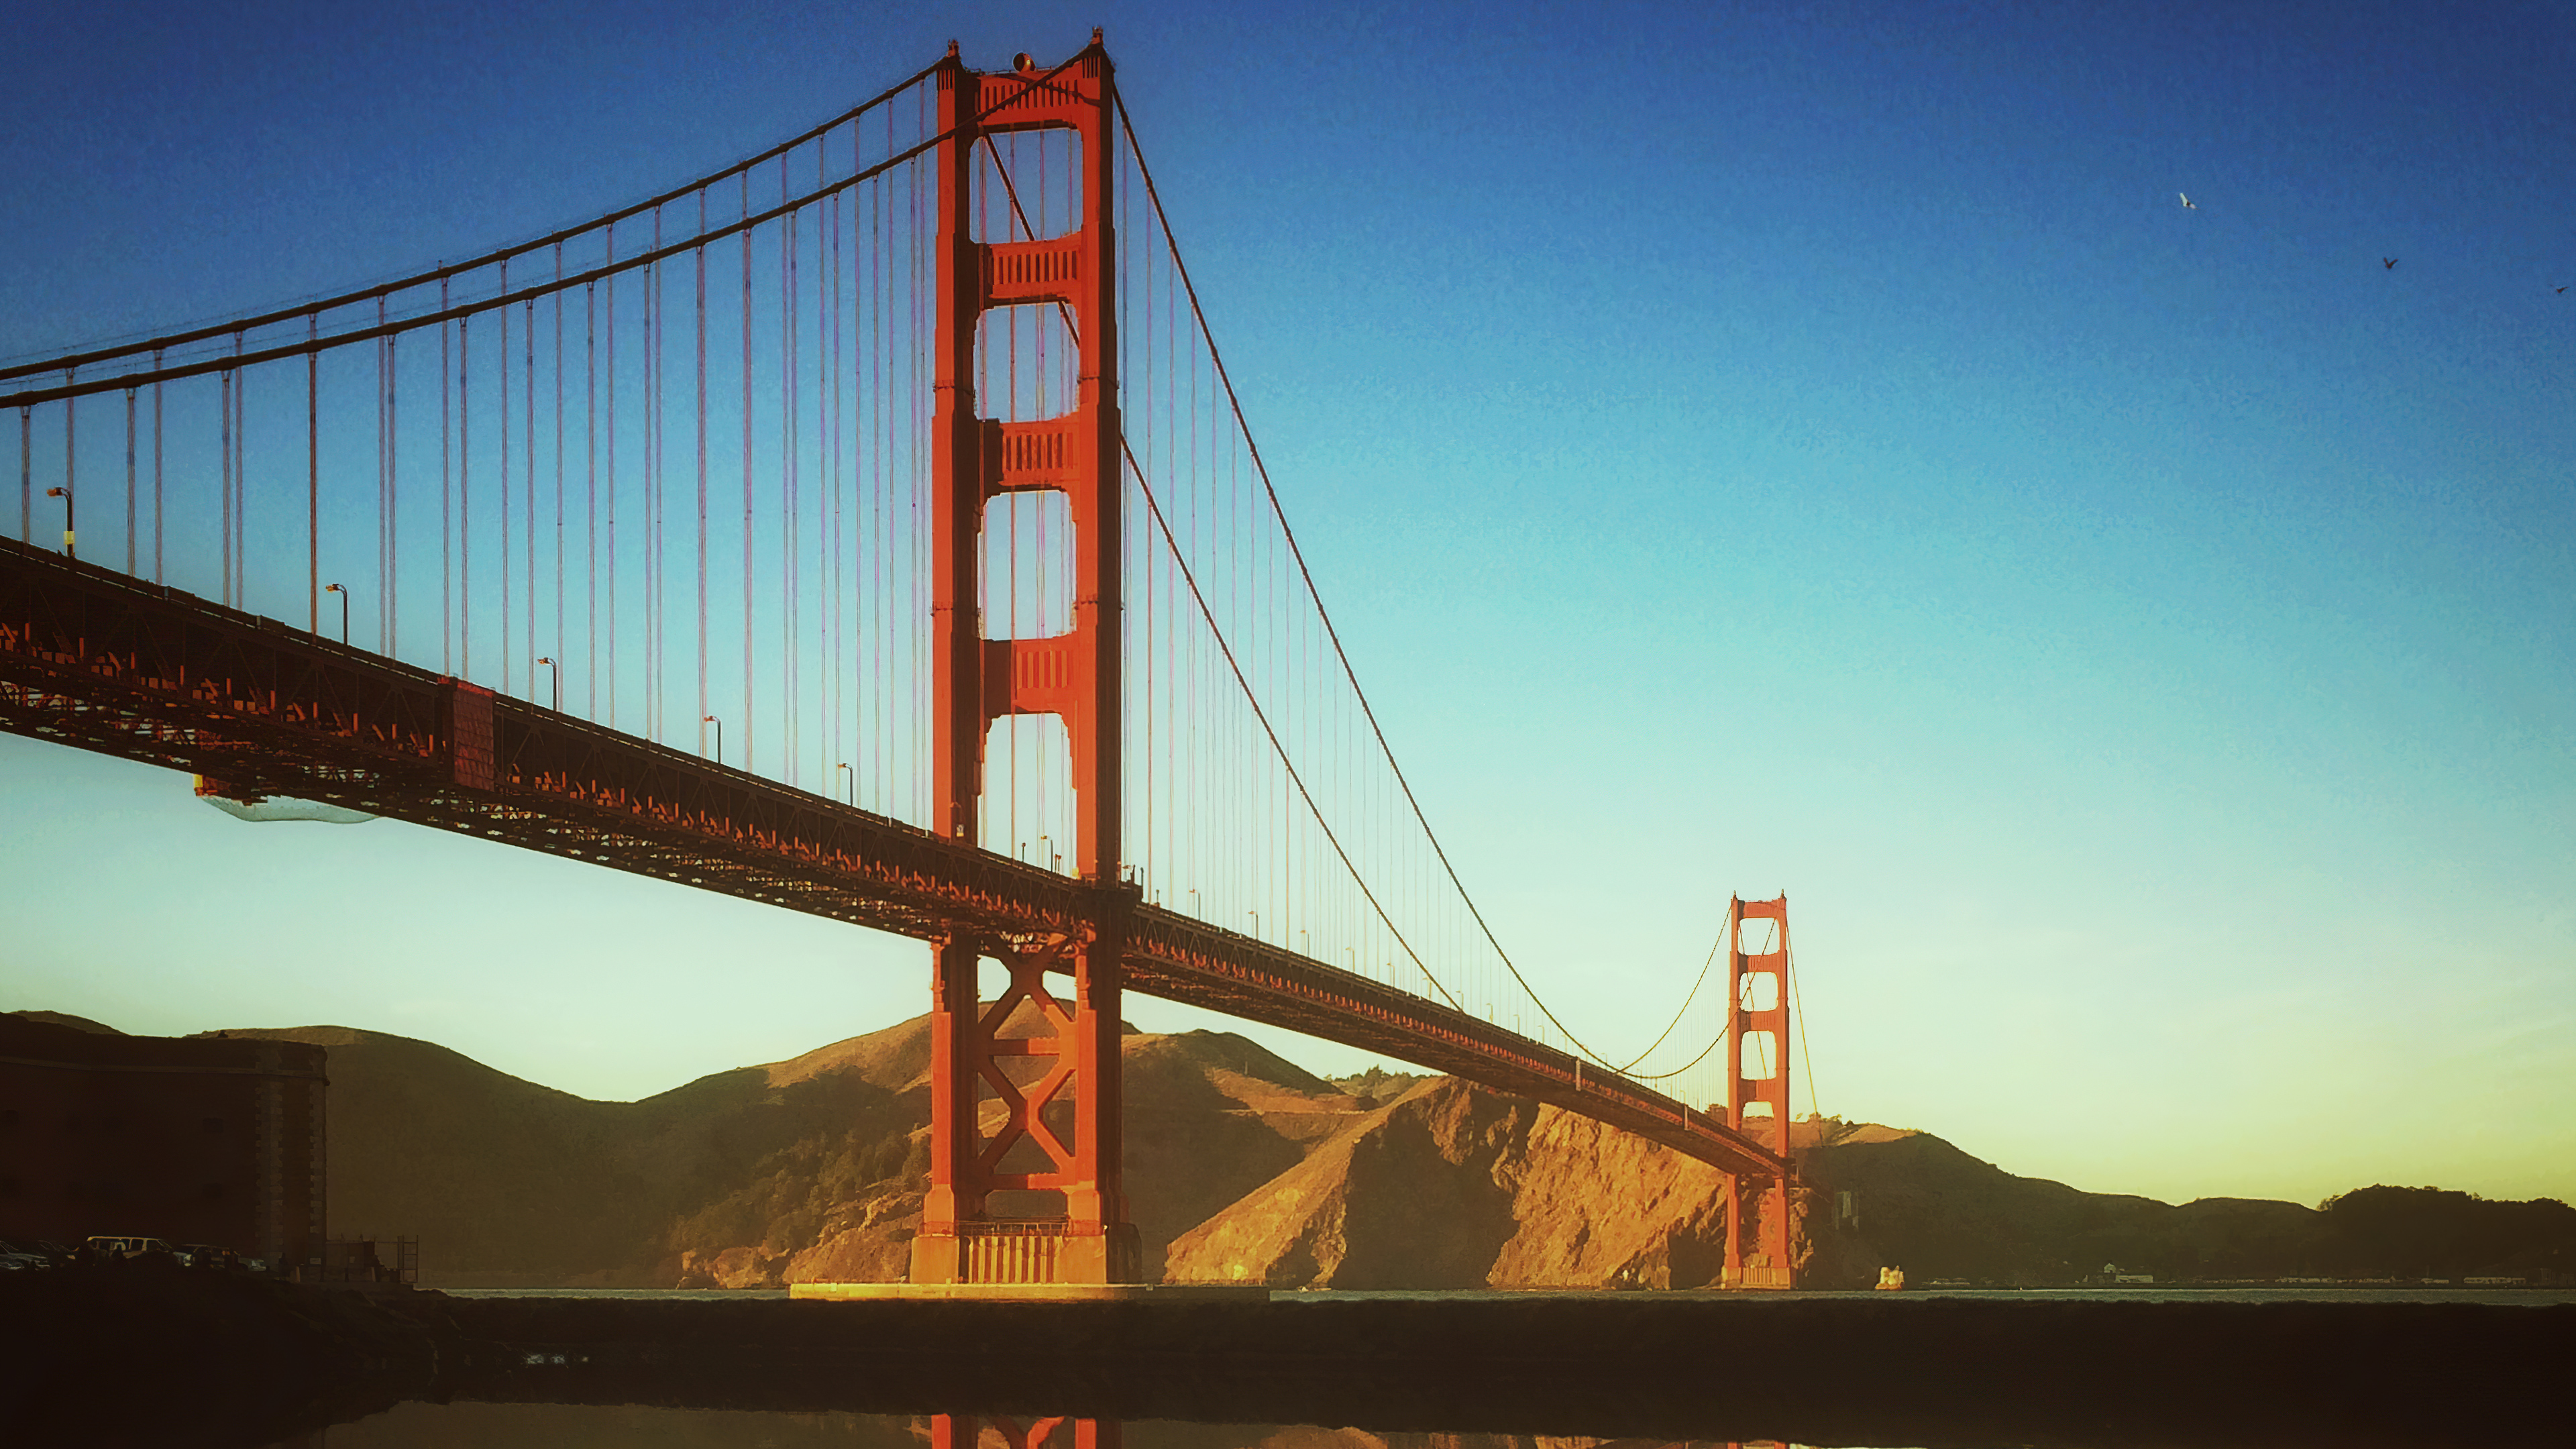 golden gate suspension bridge 4k 1642250974 - Golden Gate Suspension Bridge 4k - Golden Gate Suspension Bridge wallpapers, Golden Gate Suspension Bridge 4k wallpapers